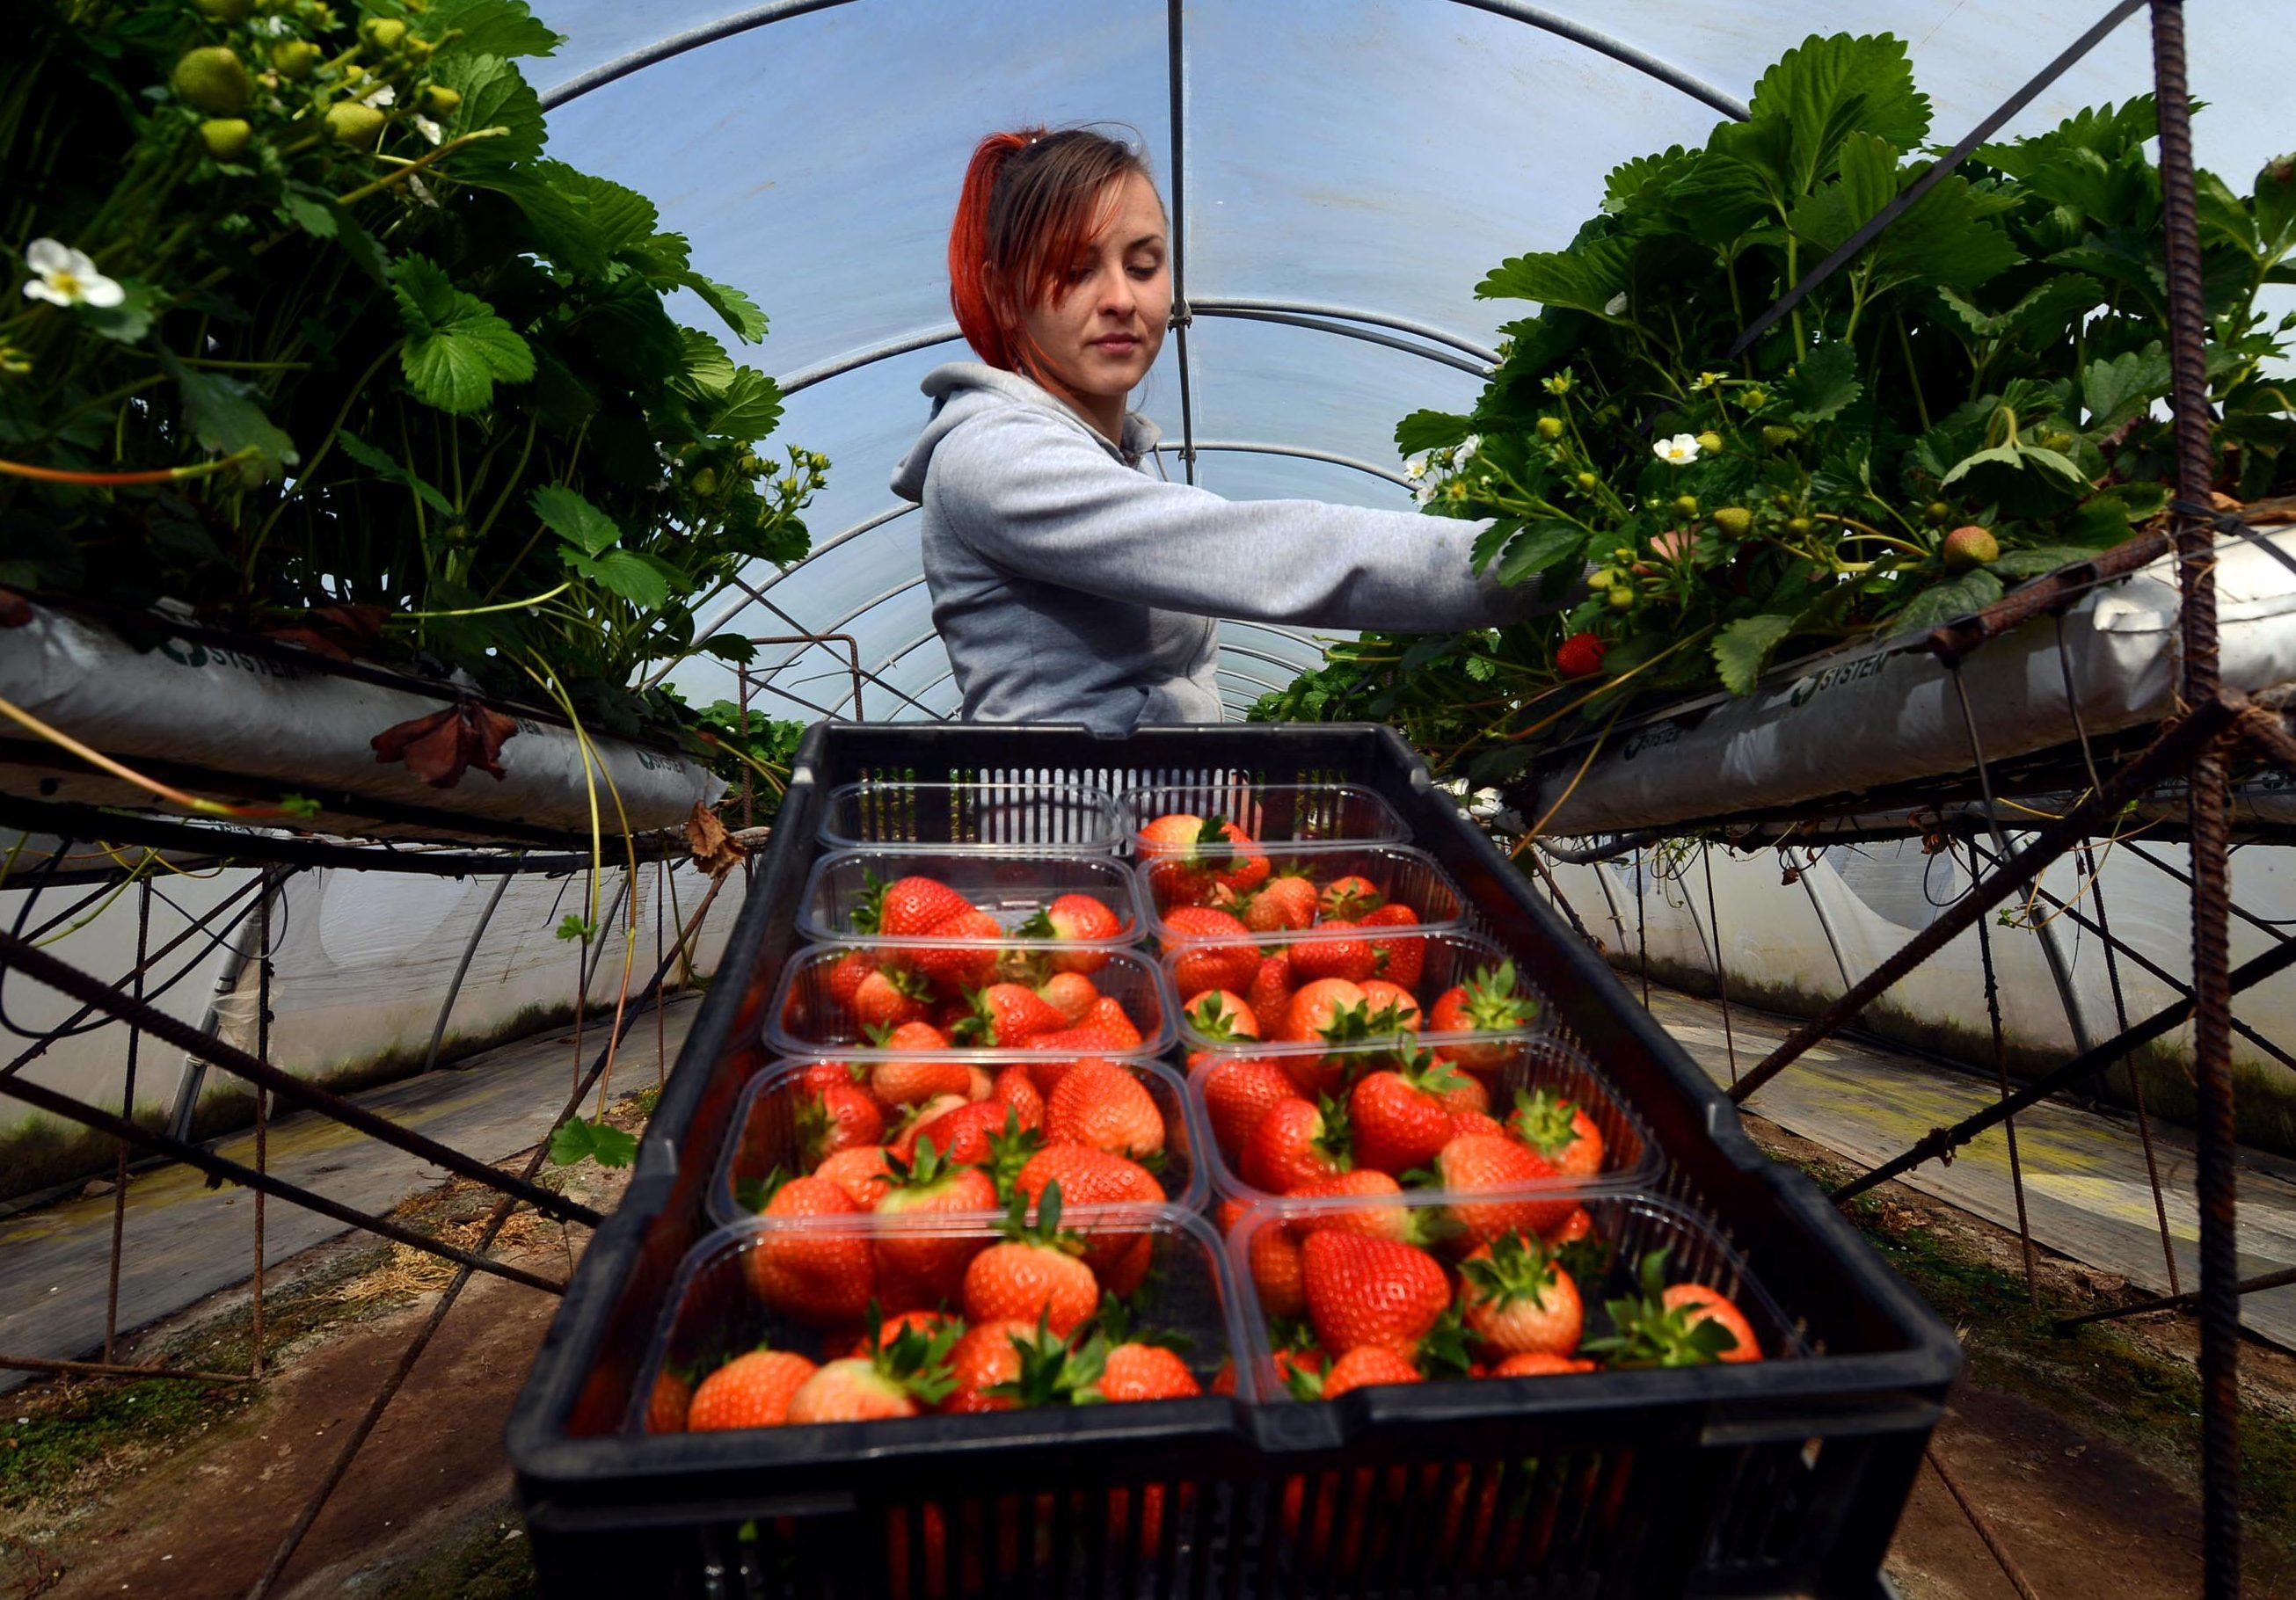 Fruit picker Patrycja Sztafit in the polytunnels at East Seaton farm near Arbroath as the strawberry season got underway in 2015